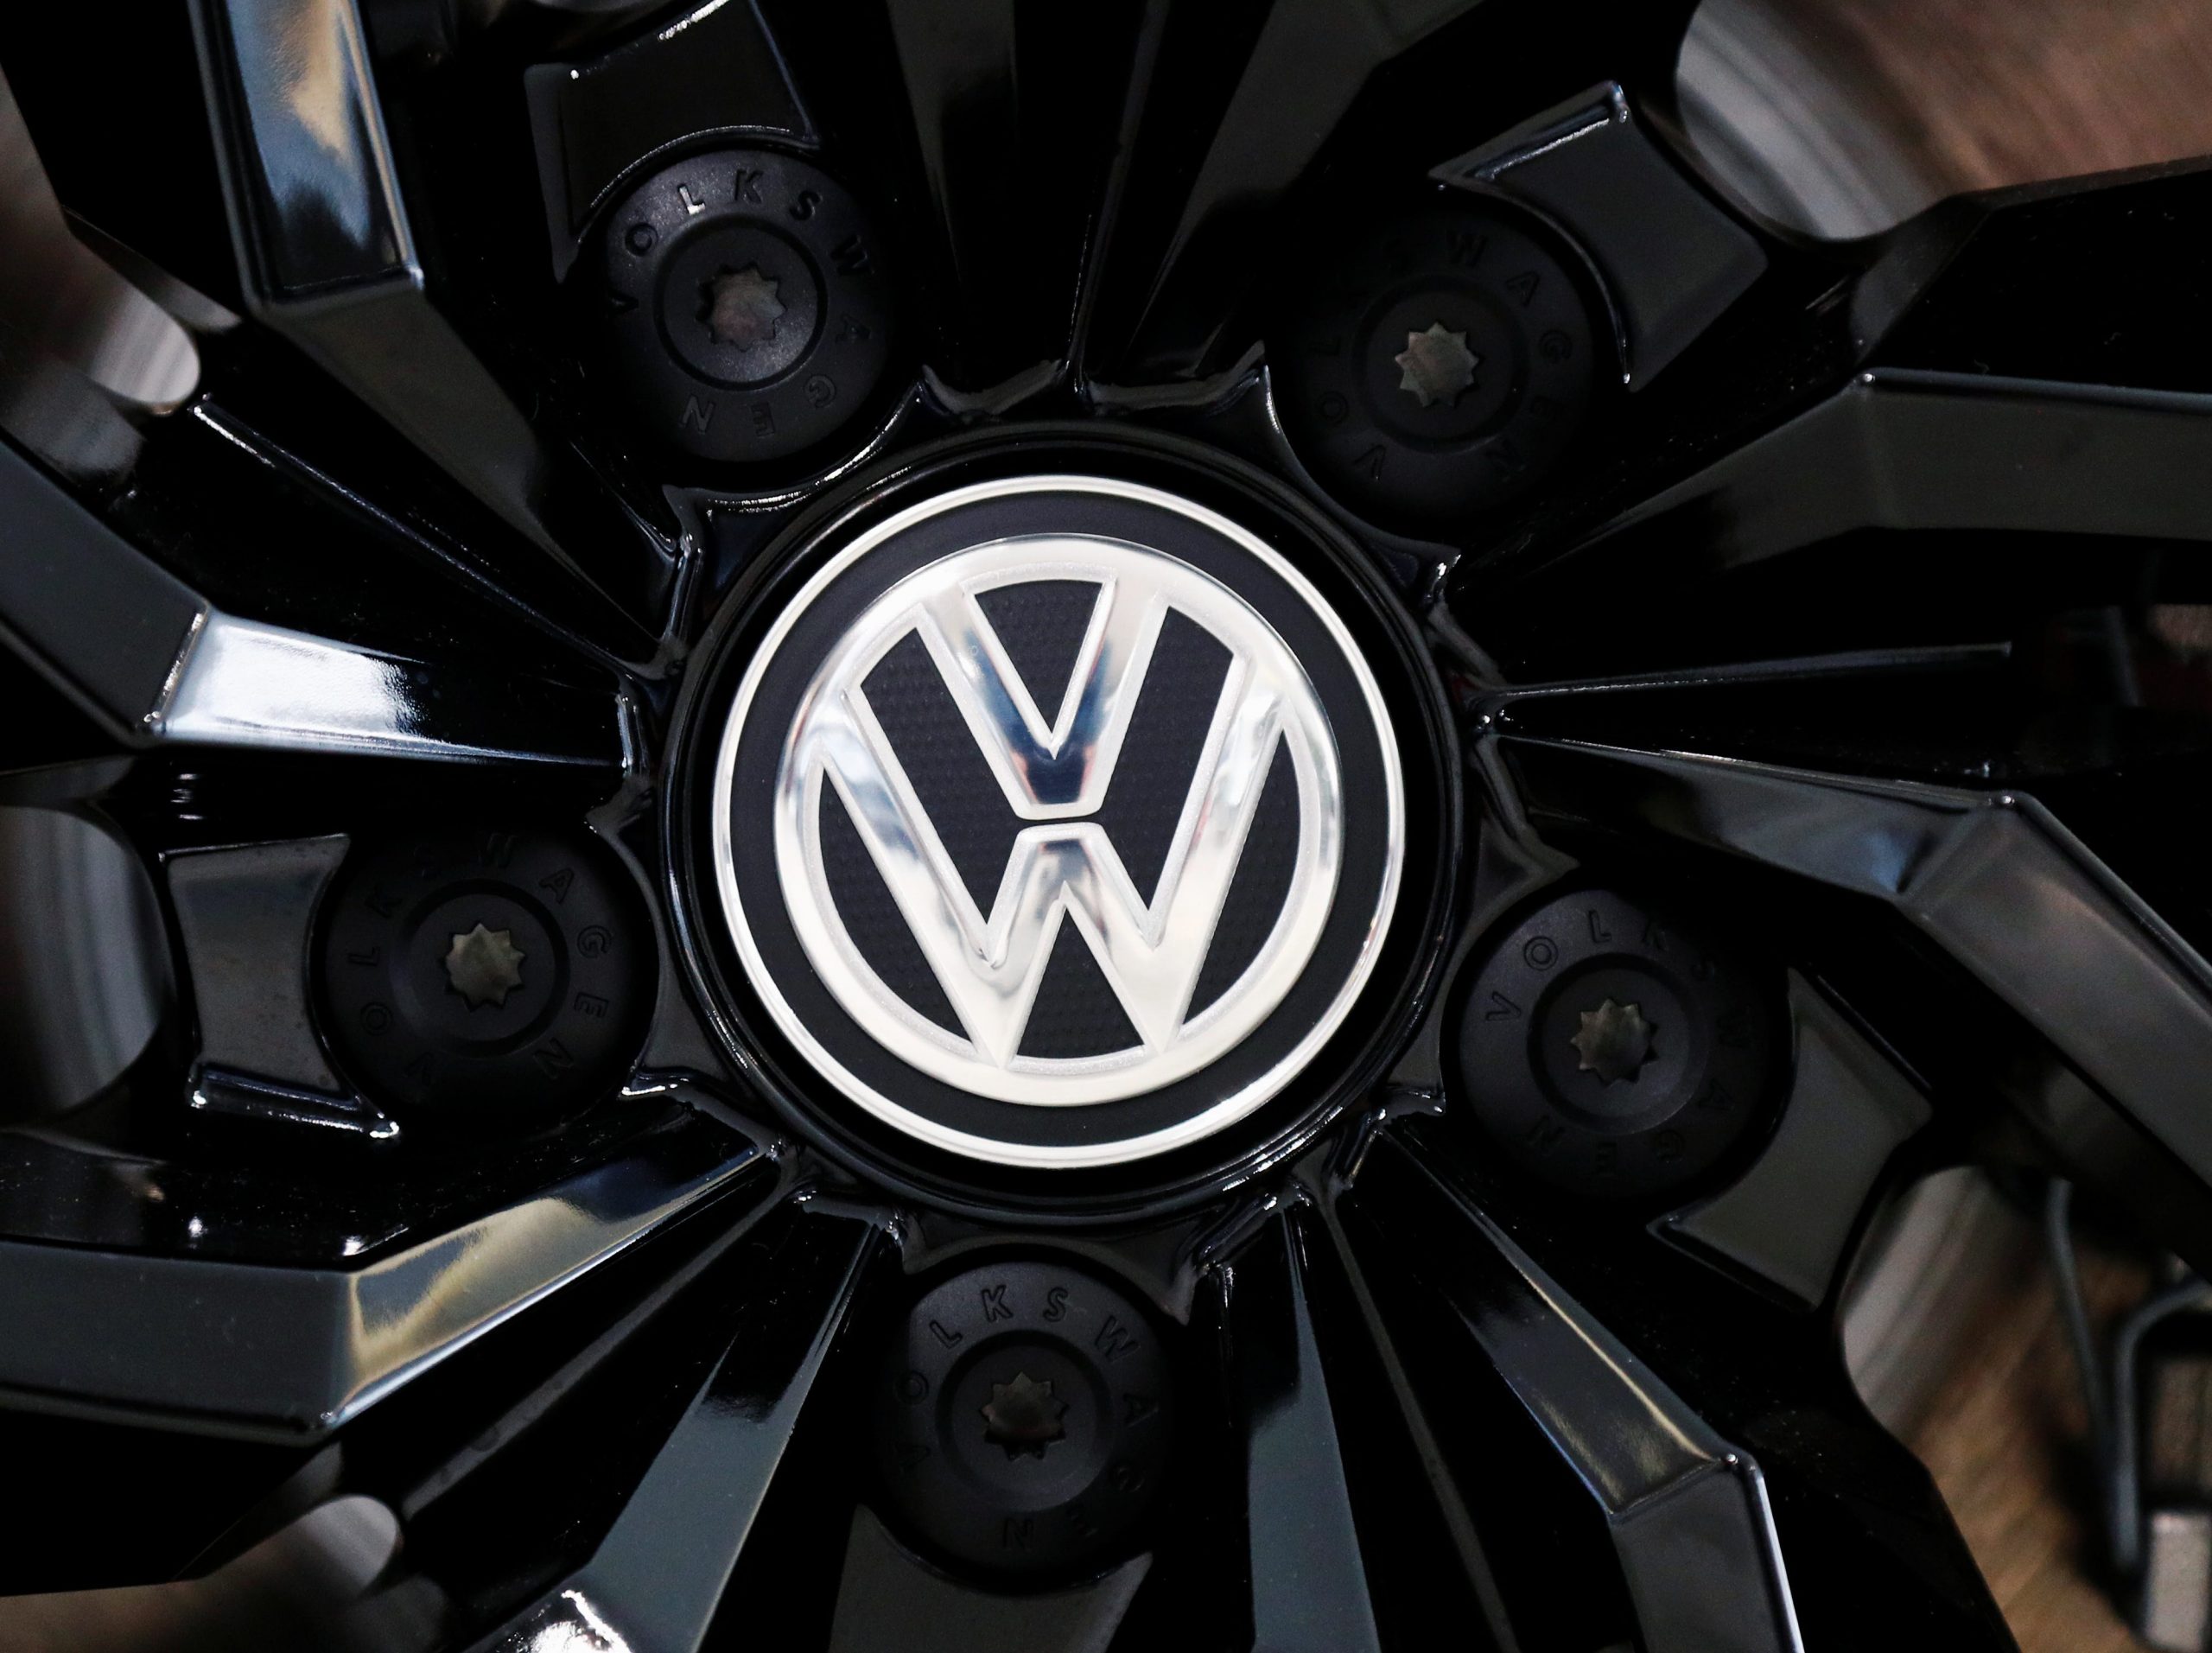 FILE PHOTO: The logo of German carmaker Volkswagen is seen on a rim cap in a showroom of a Volkswagen car dealer in Brussels, Belgium July 9, 2020. REUTERS/Francois Lenoir